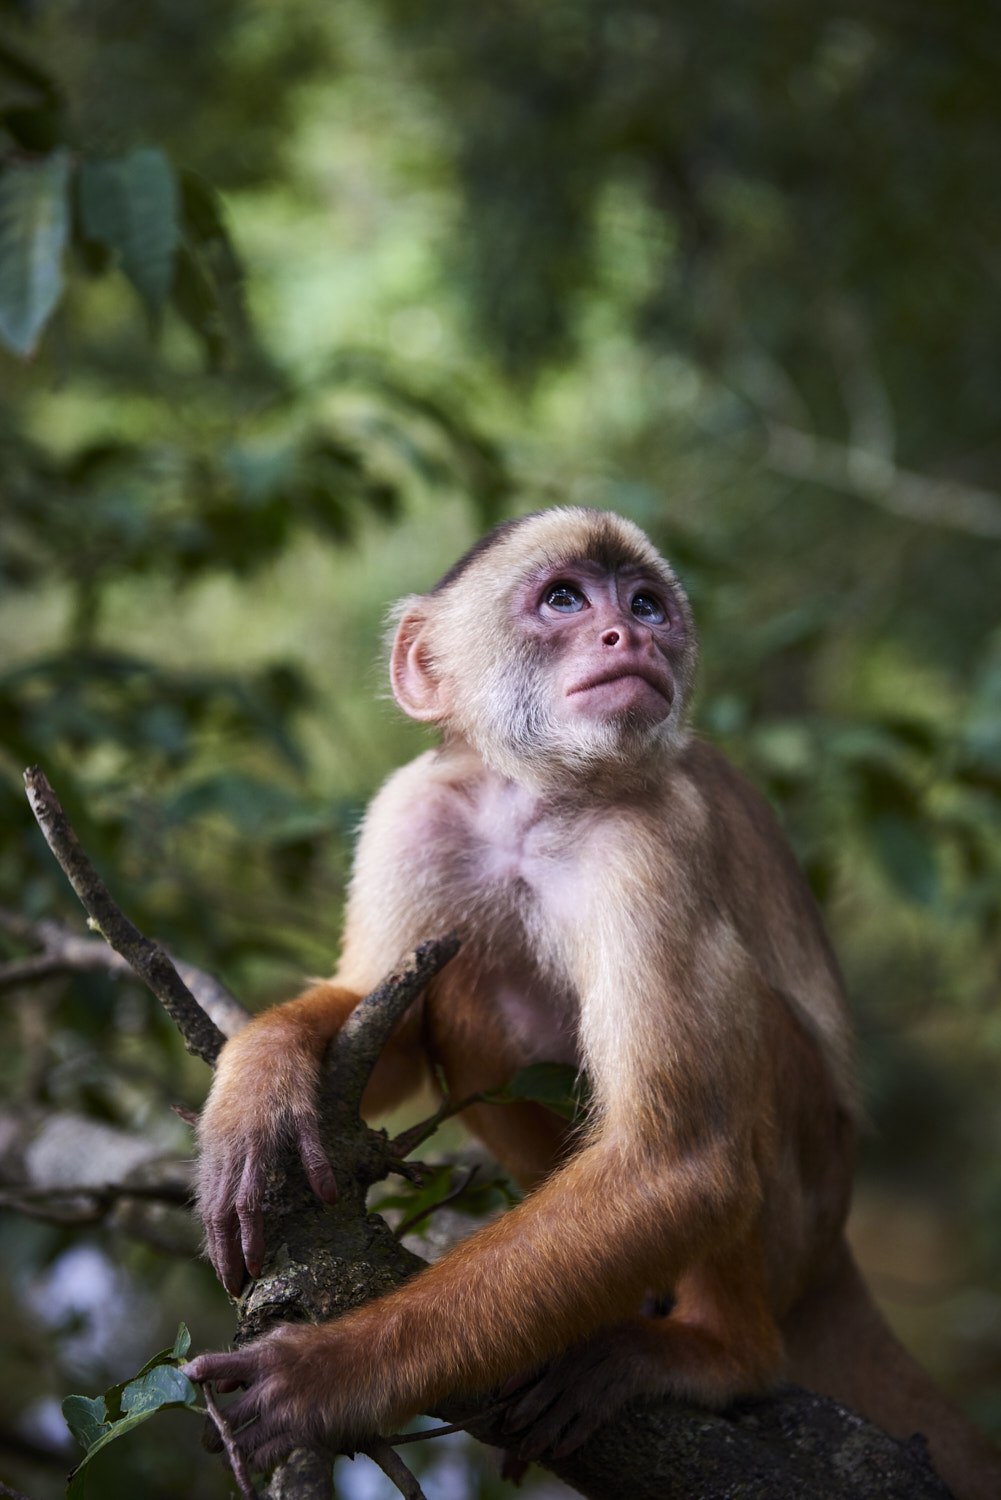 Amazon, Brazil: Artistic portrait of a capucin monkey looking pensively up, surrounded by dense rainforest vegetation.